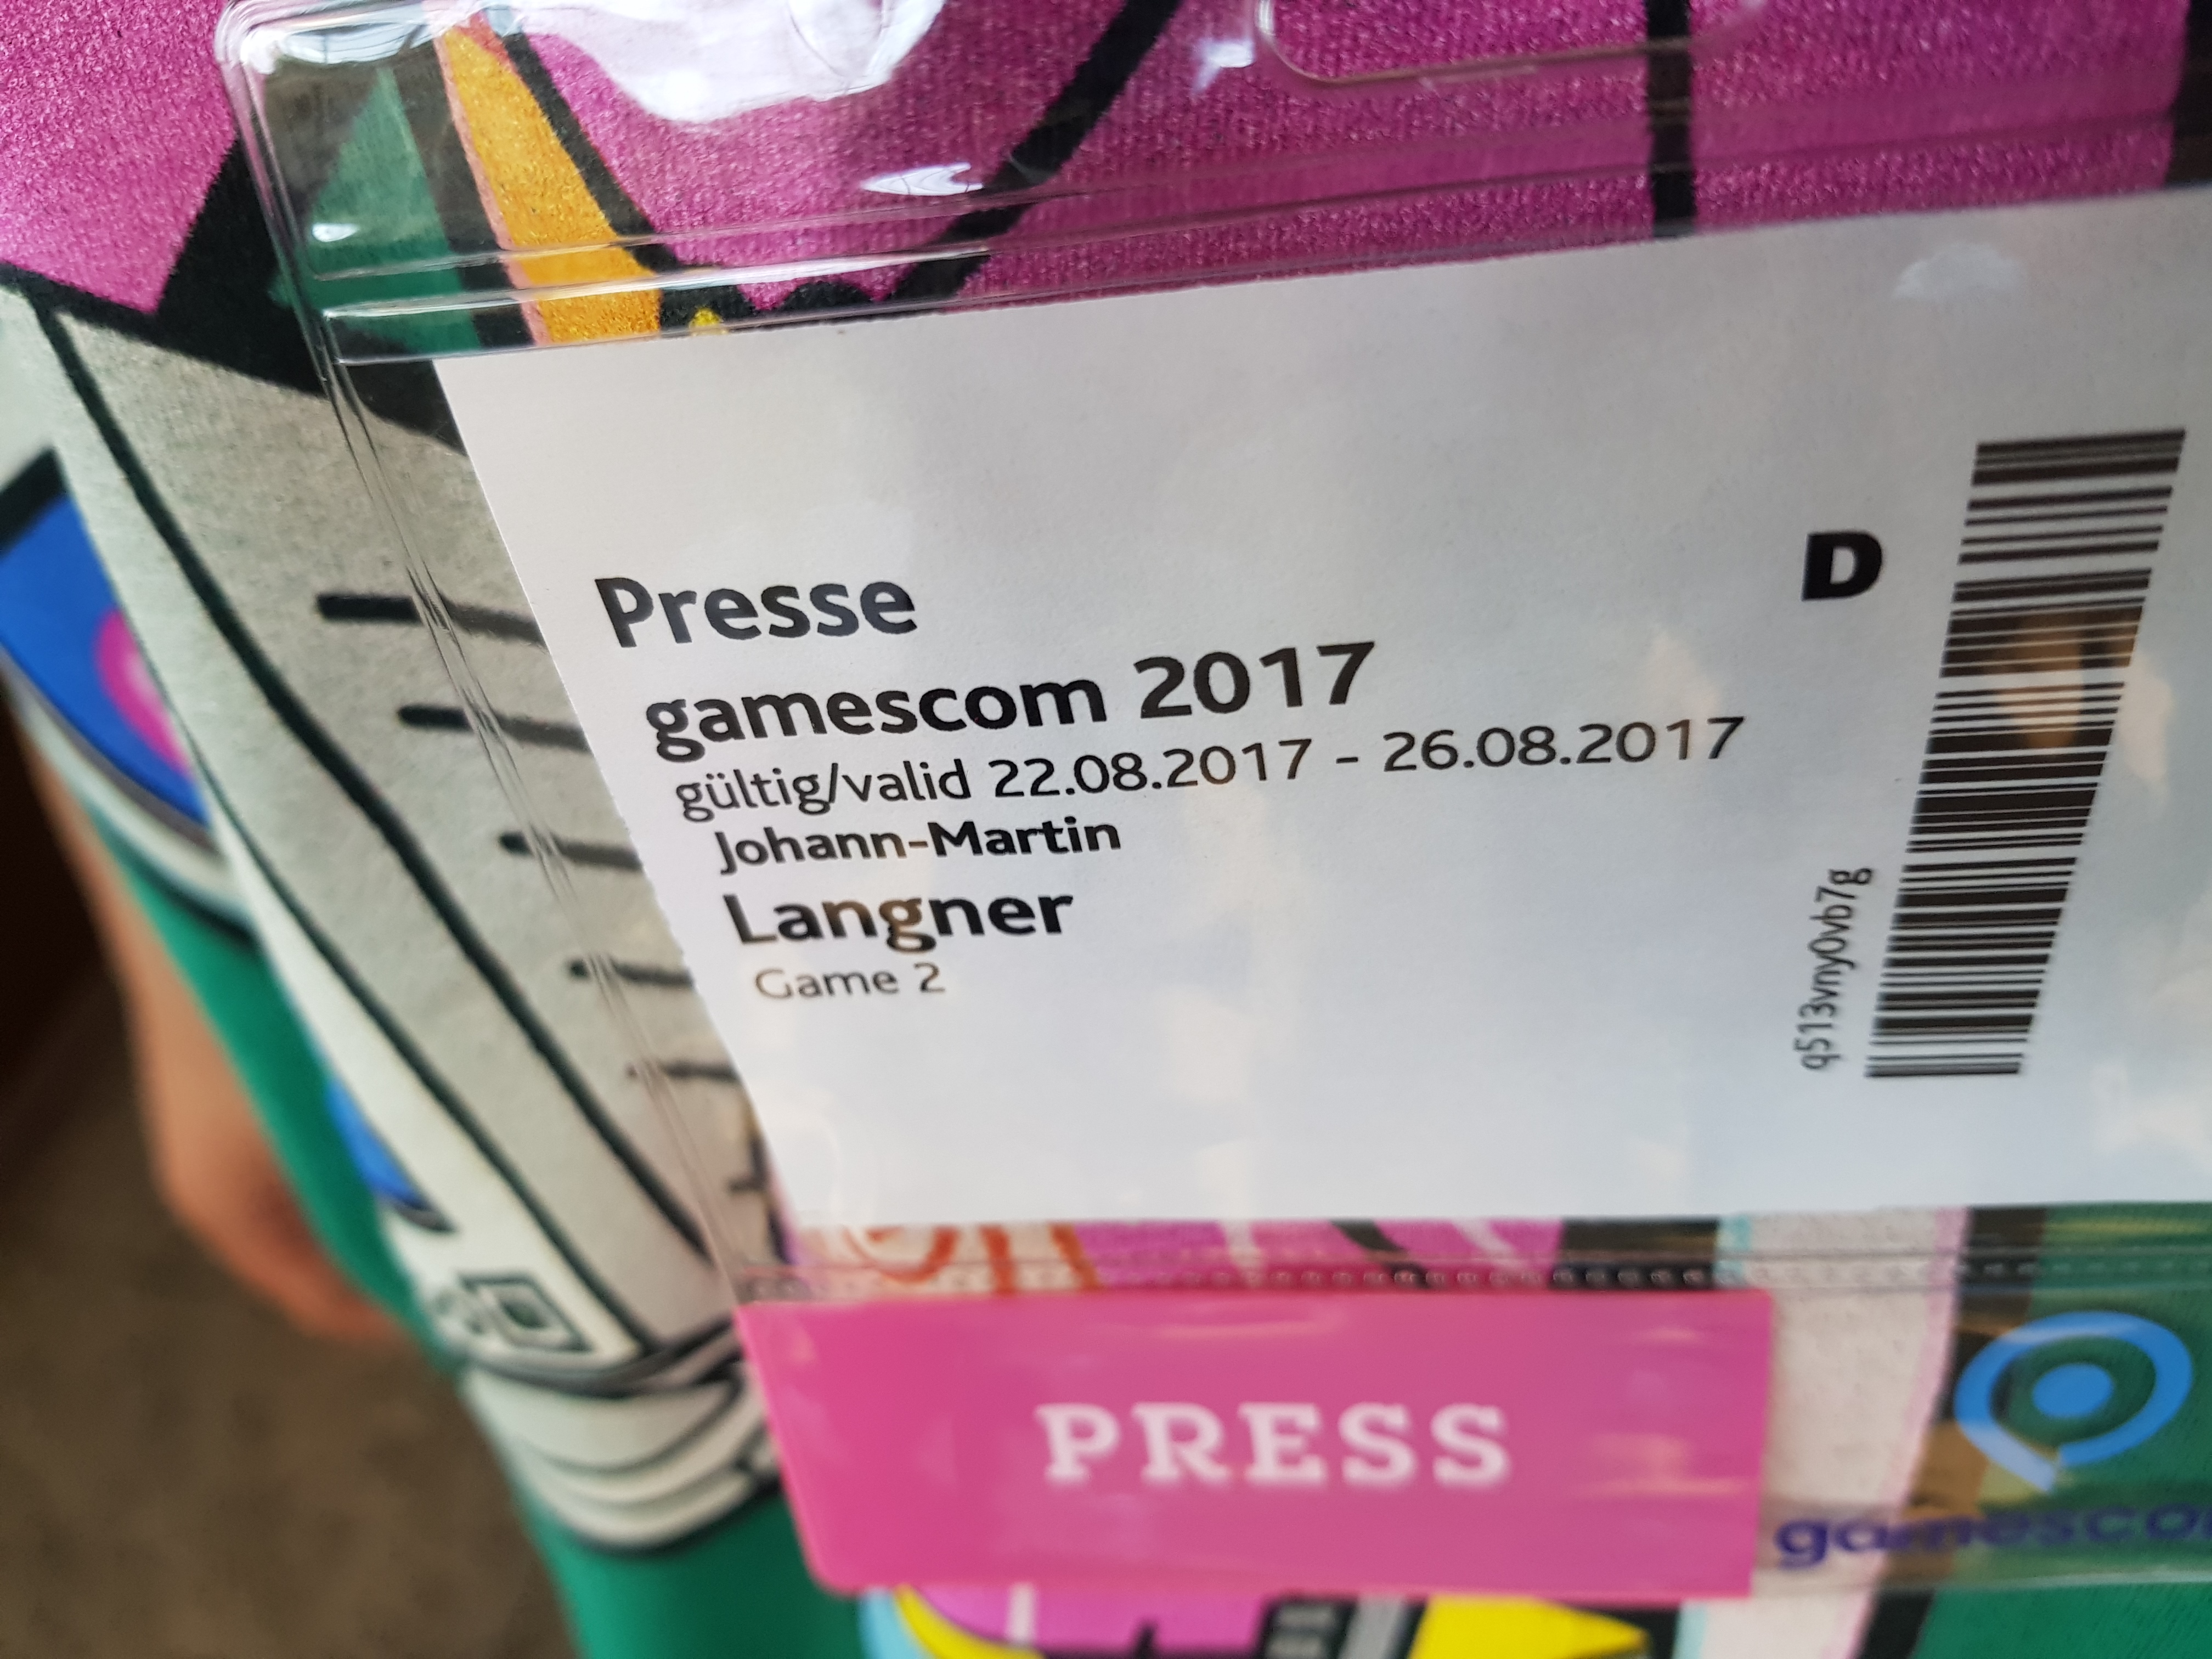 gamescom 2017 - presse ticket